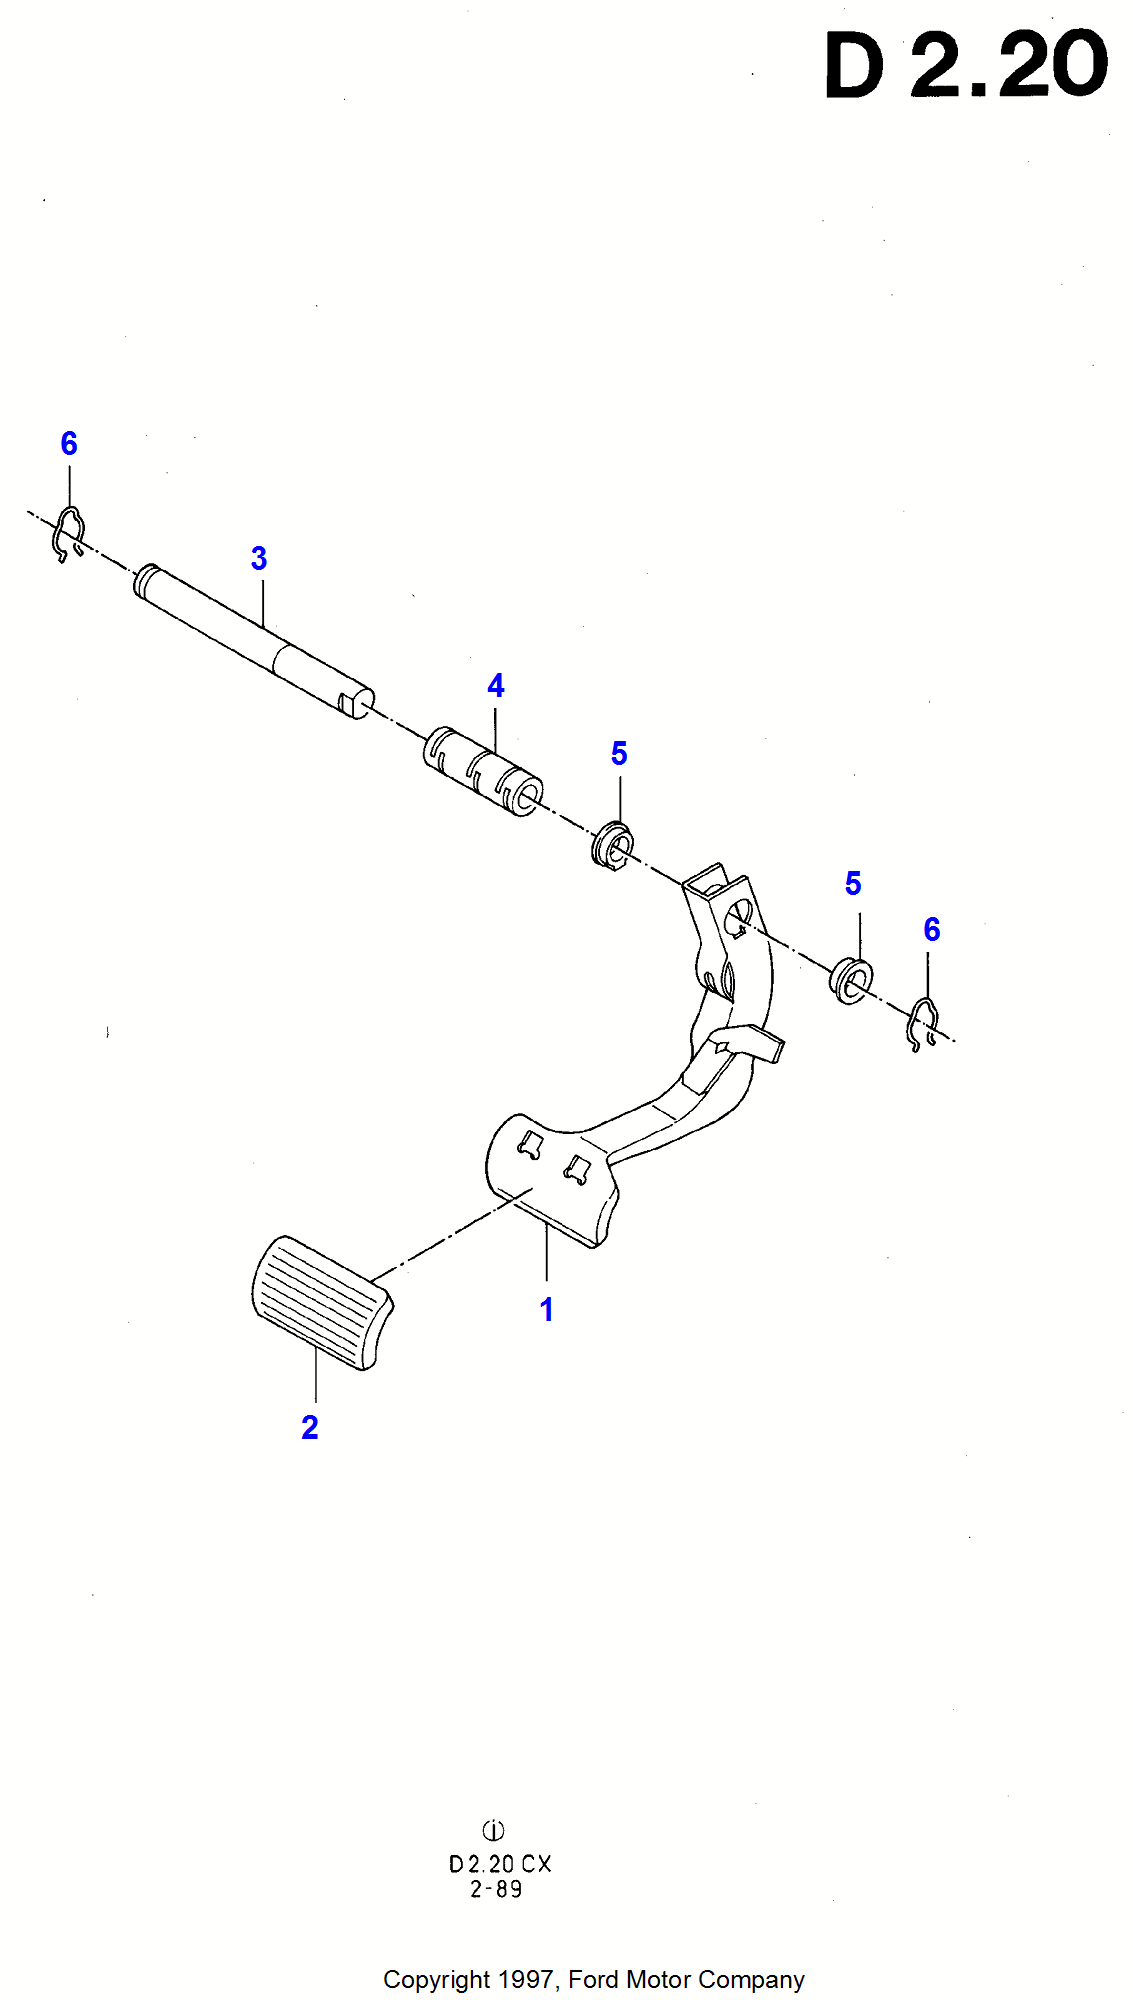 Brake Pedal for Ford Fiesta Fiesta 1989-1996               (CX)